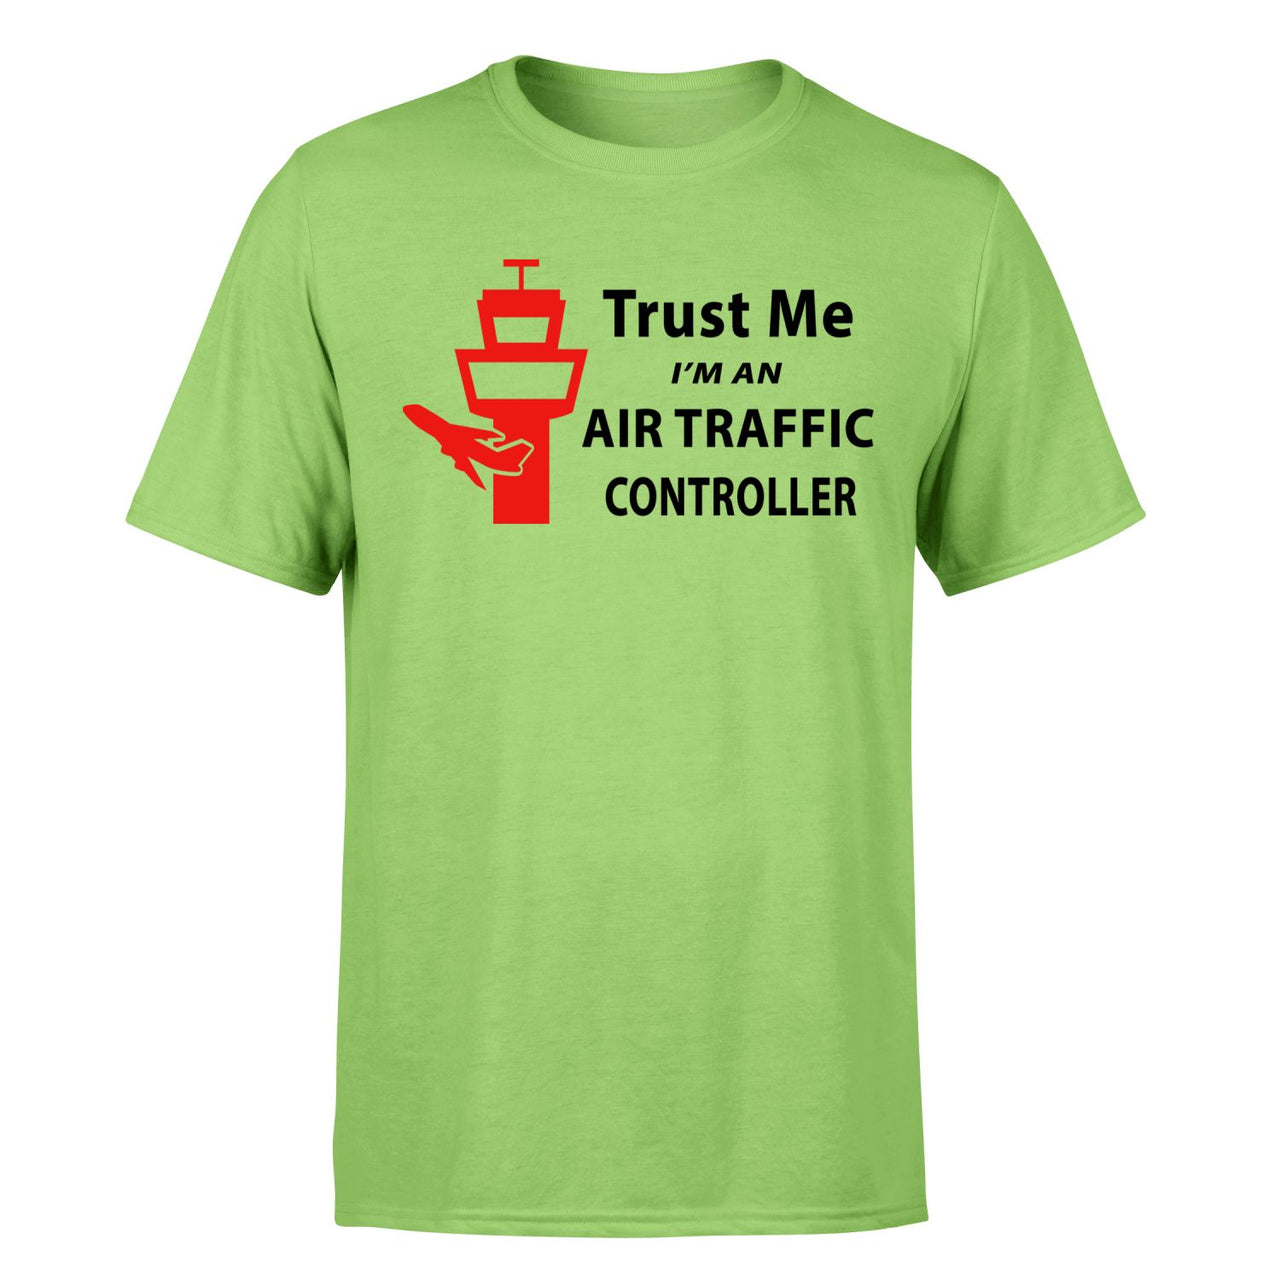 Trust Me I'm an Air Traffic Controller Designed T-Shirts